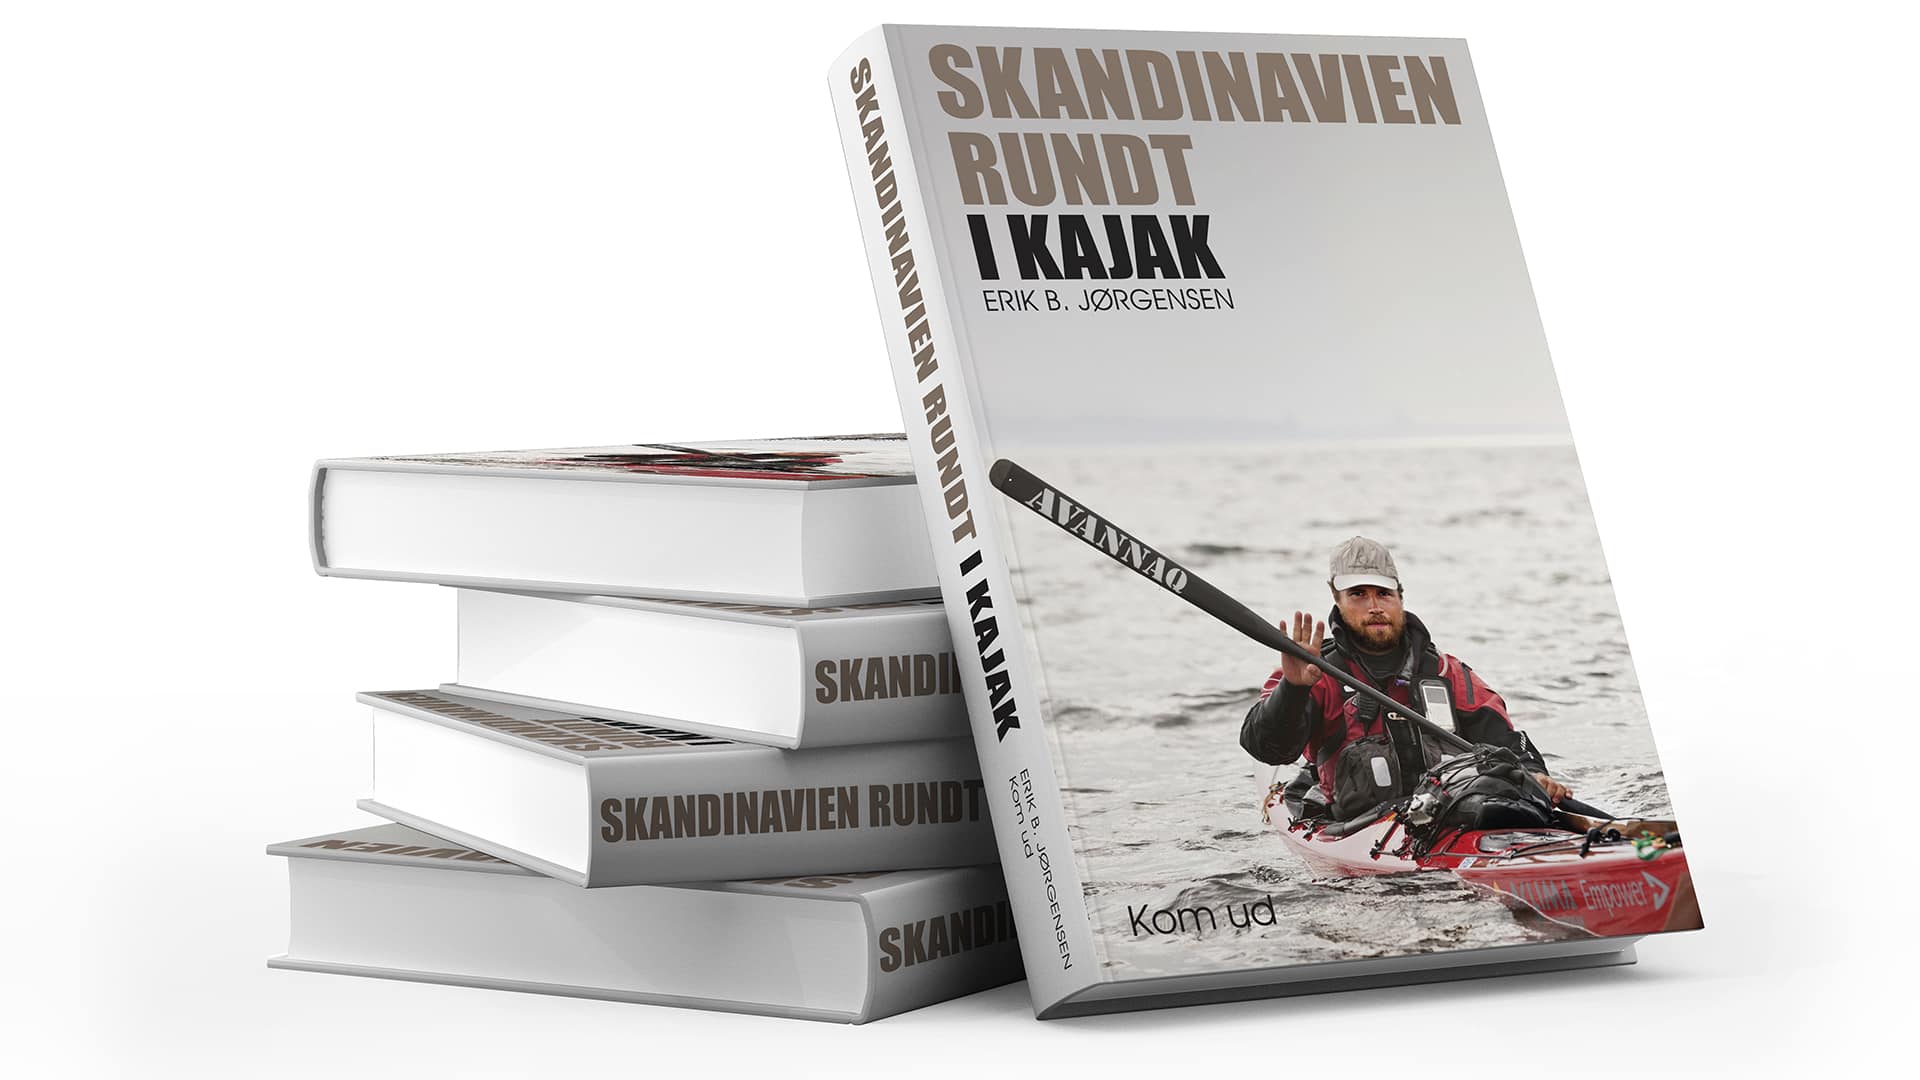 Skandinavien rundt i kajak, foredrag, Erik B. Jørgensen, Skandinavien rundt, bogstak